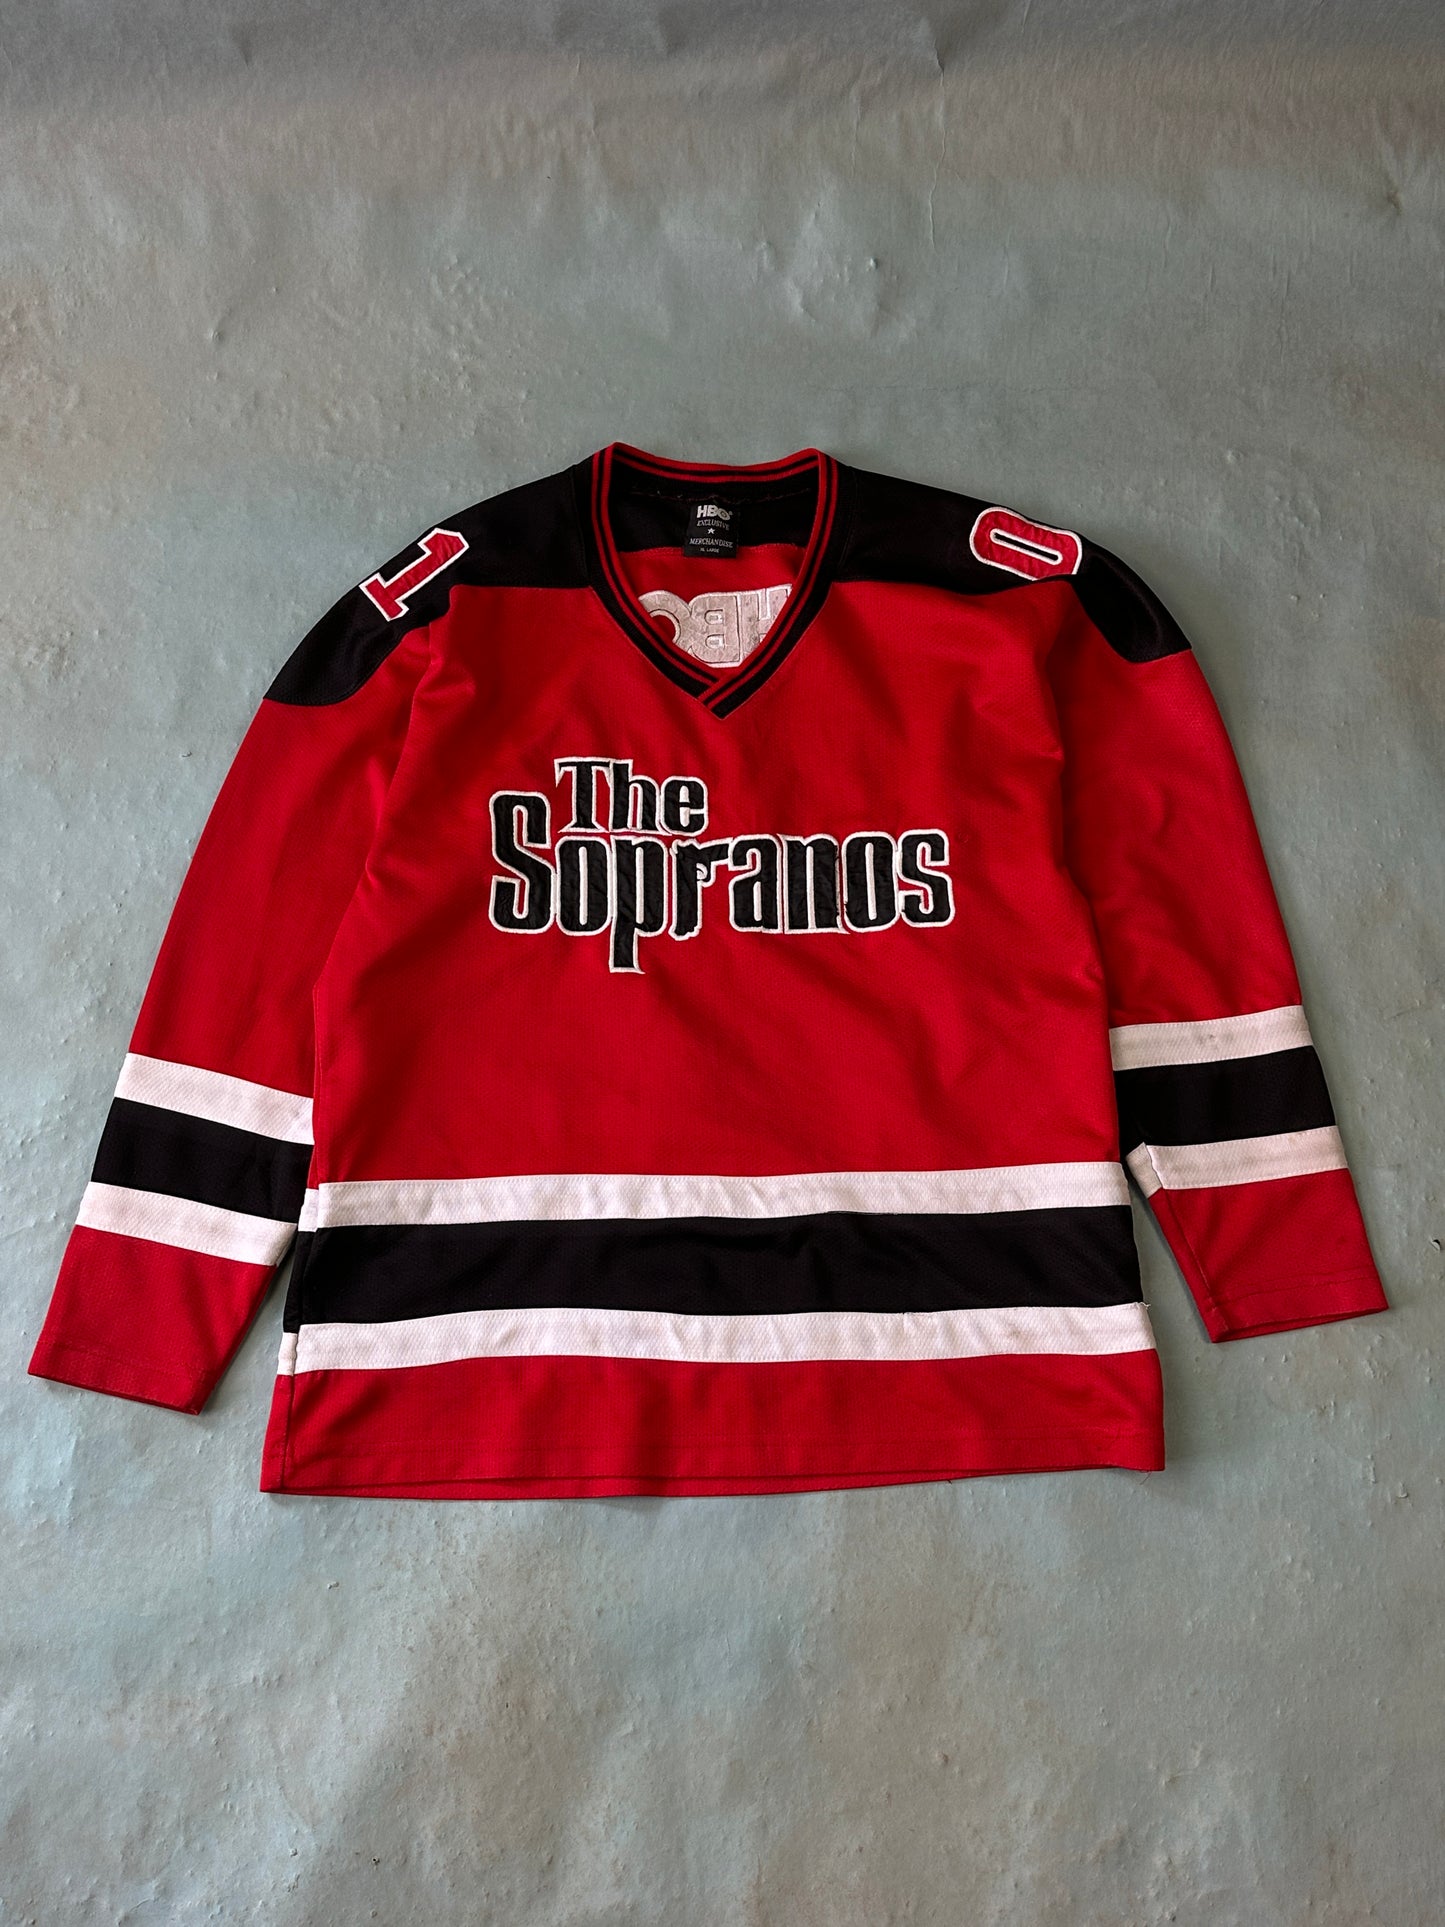 The Sopranos Vintage 2001 Jersey - XL